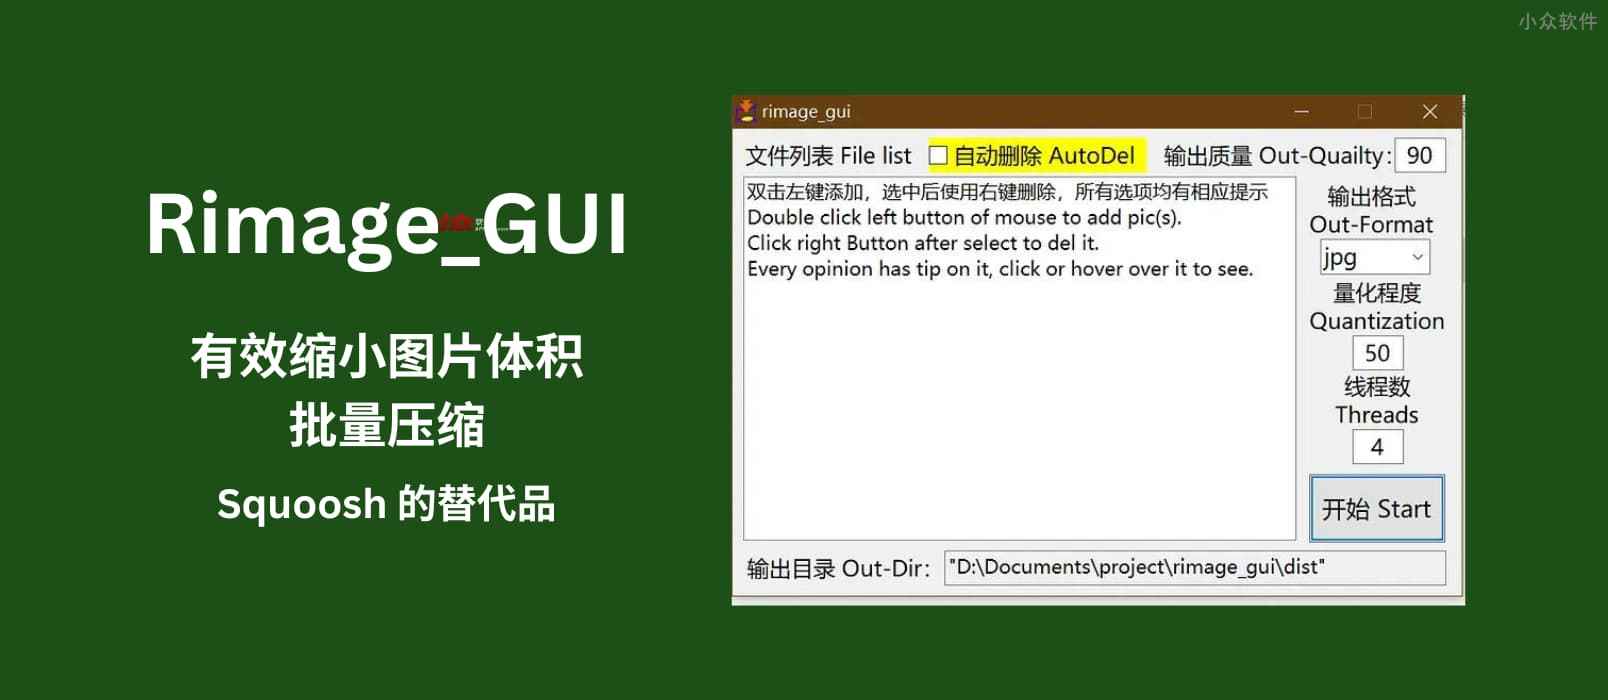 Rimage_GUI – 批量图片压缩工具：Squoosh 替代品，有效缩小图片体积[Windows]